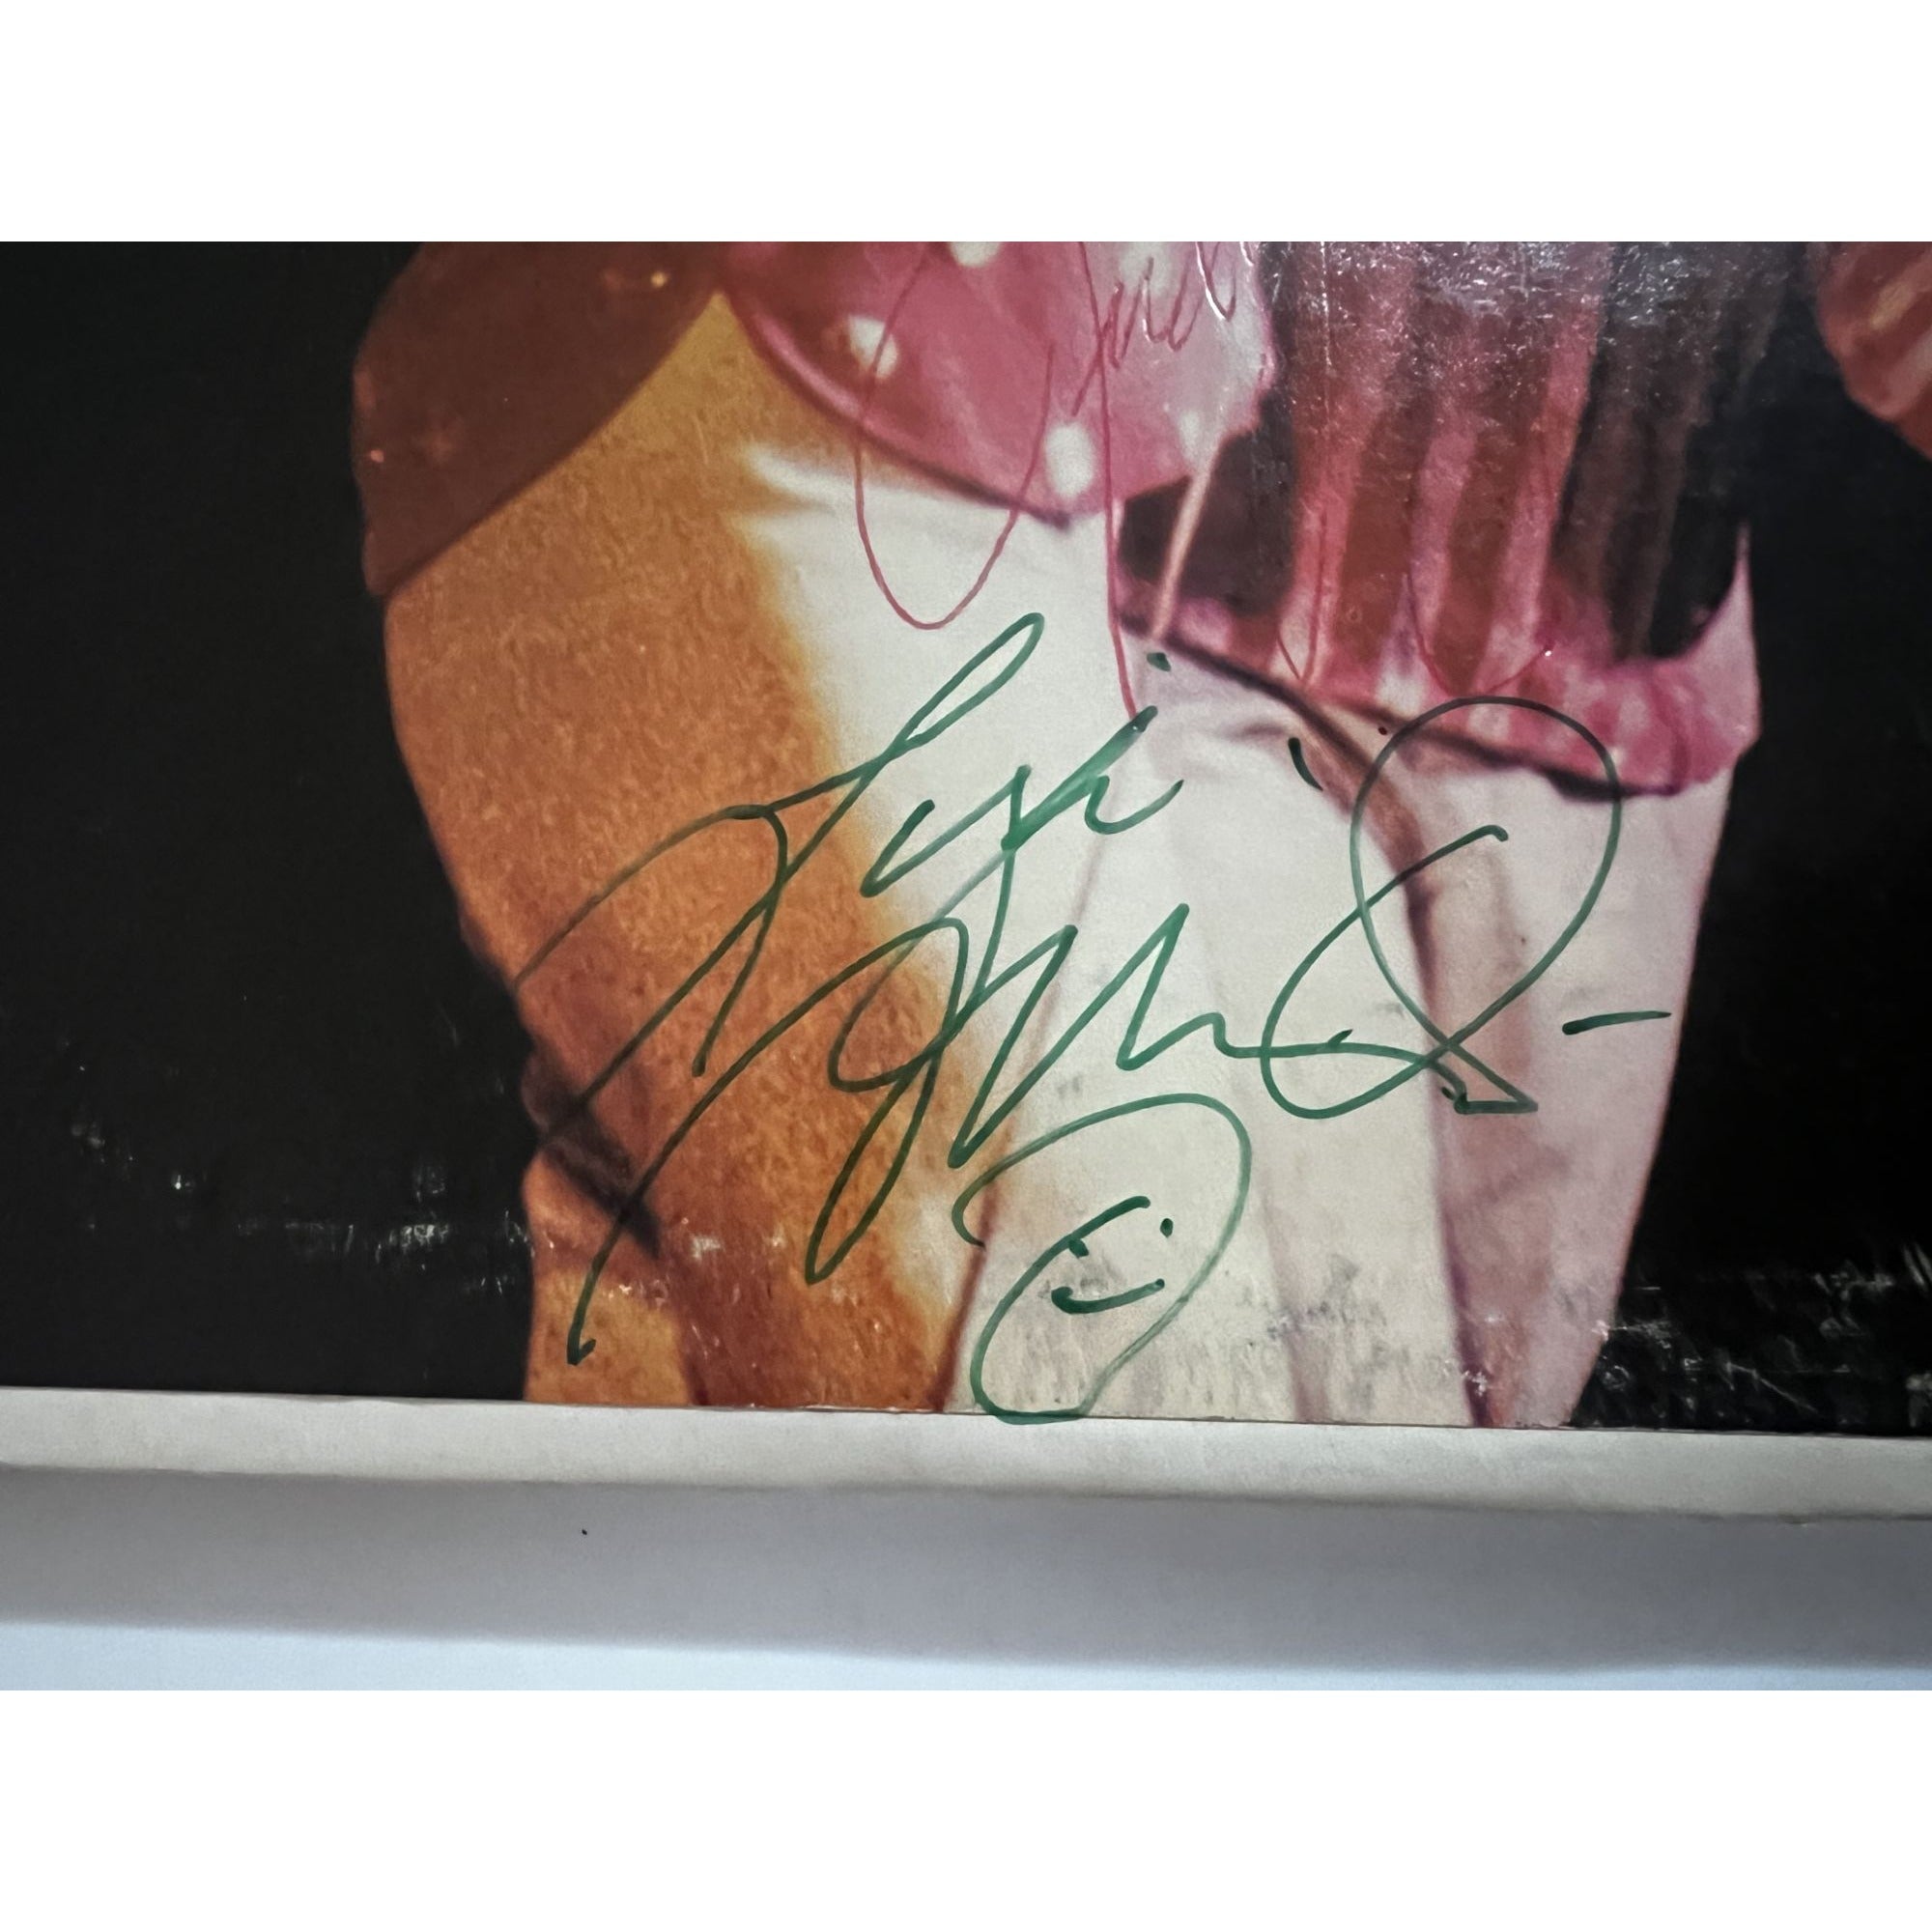 Judy Garland and Liza Minnelli live at the London Palladium original LP signed